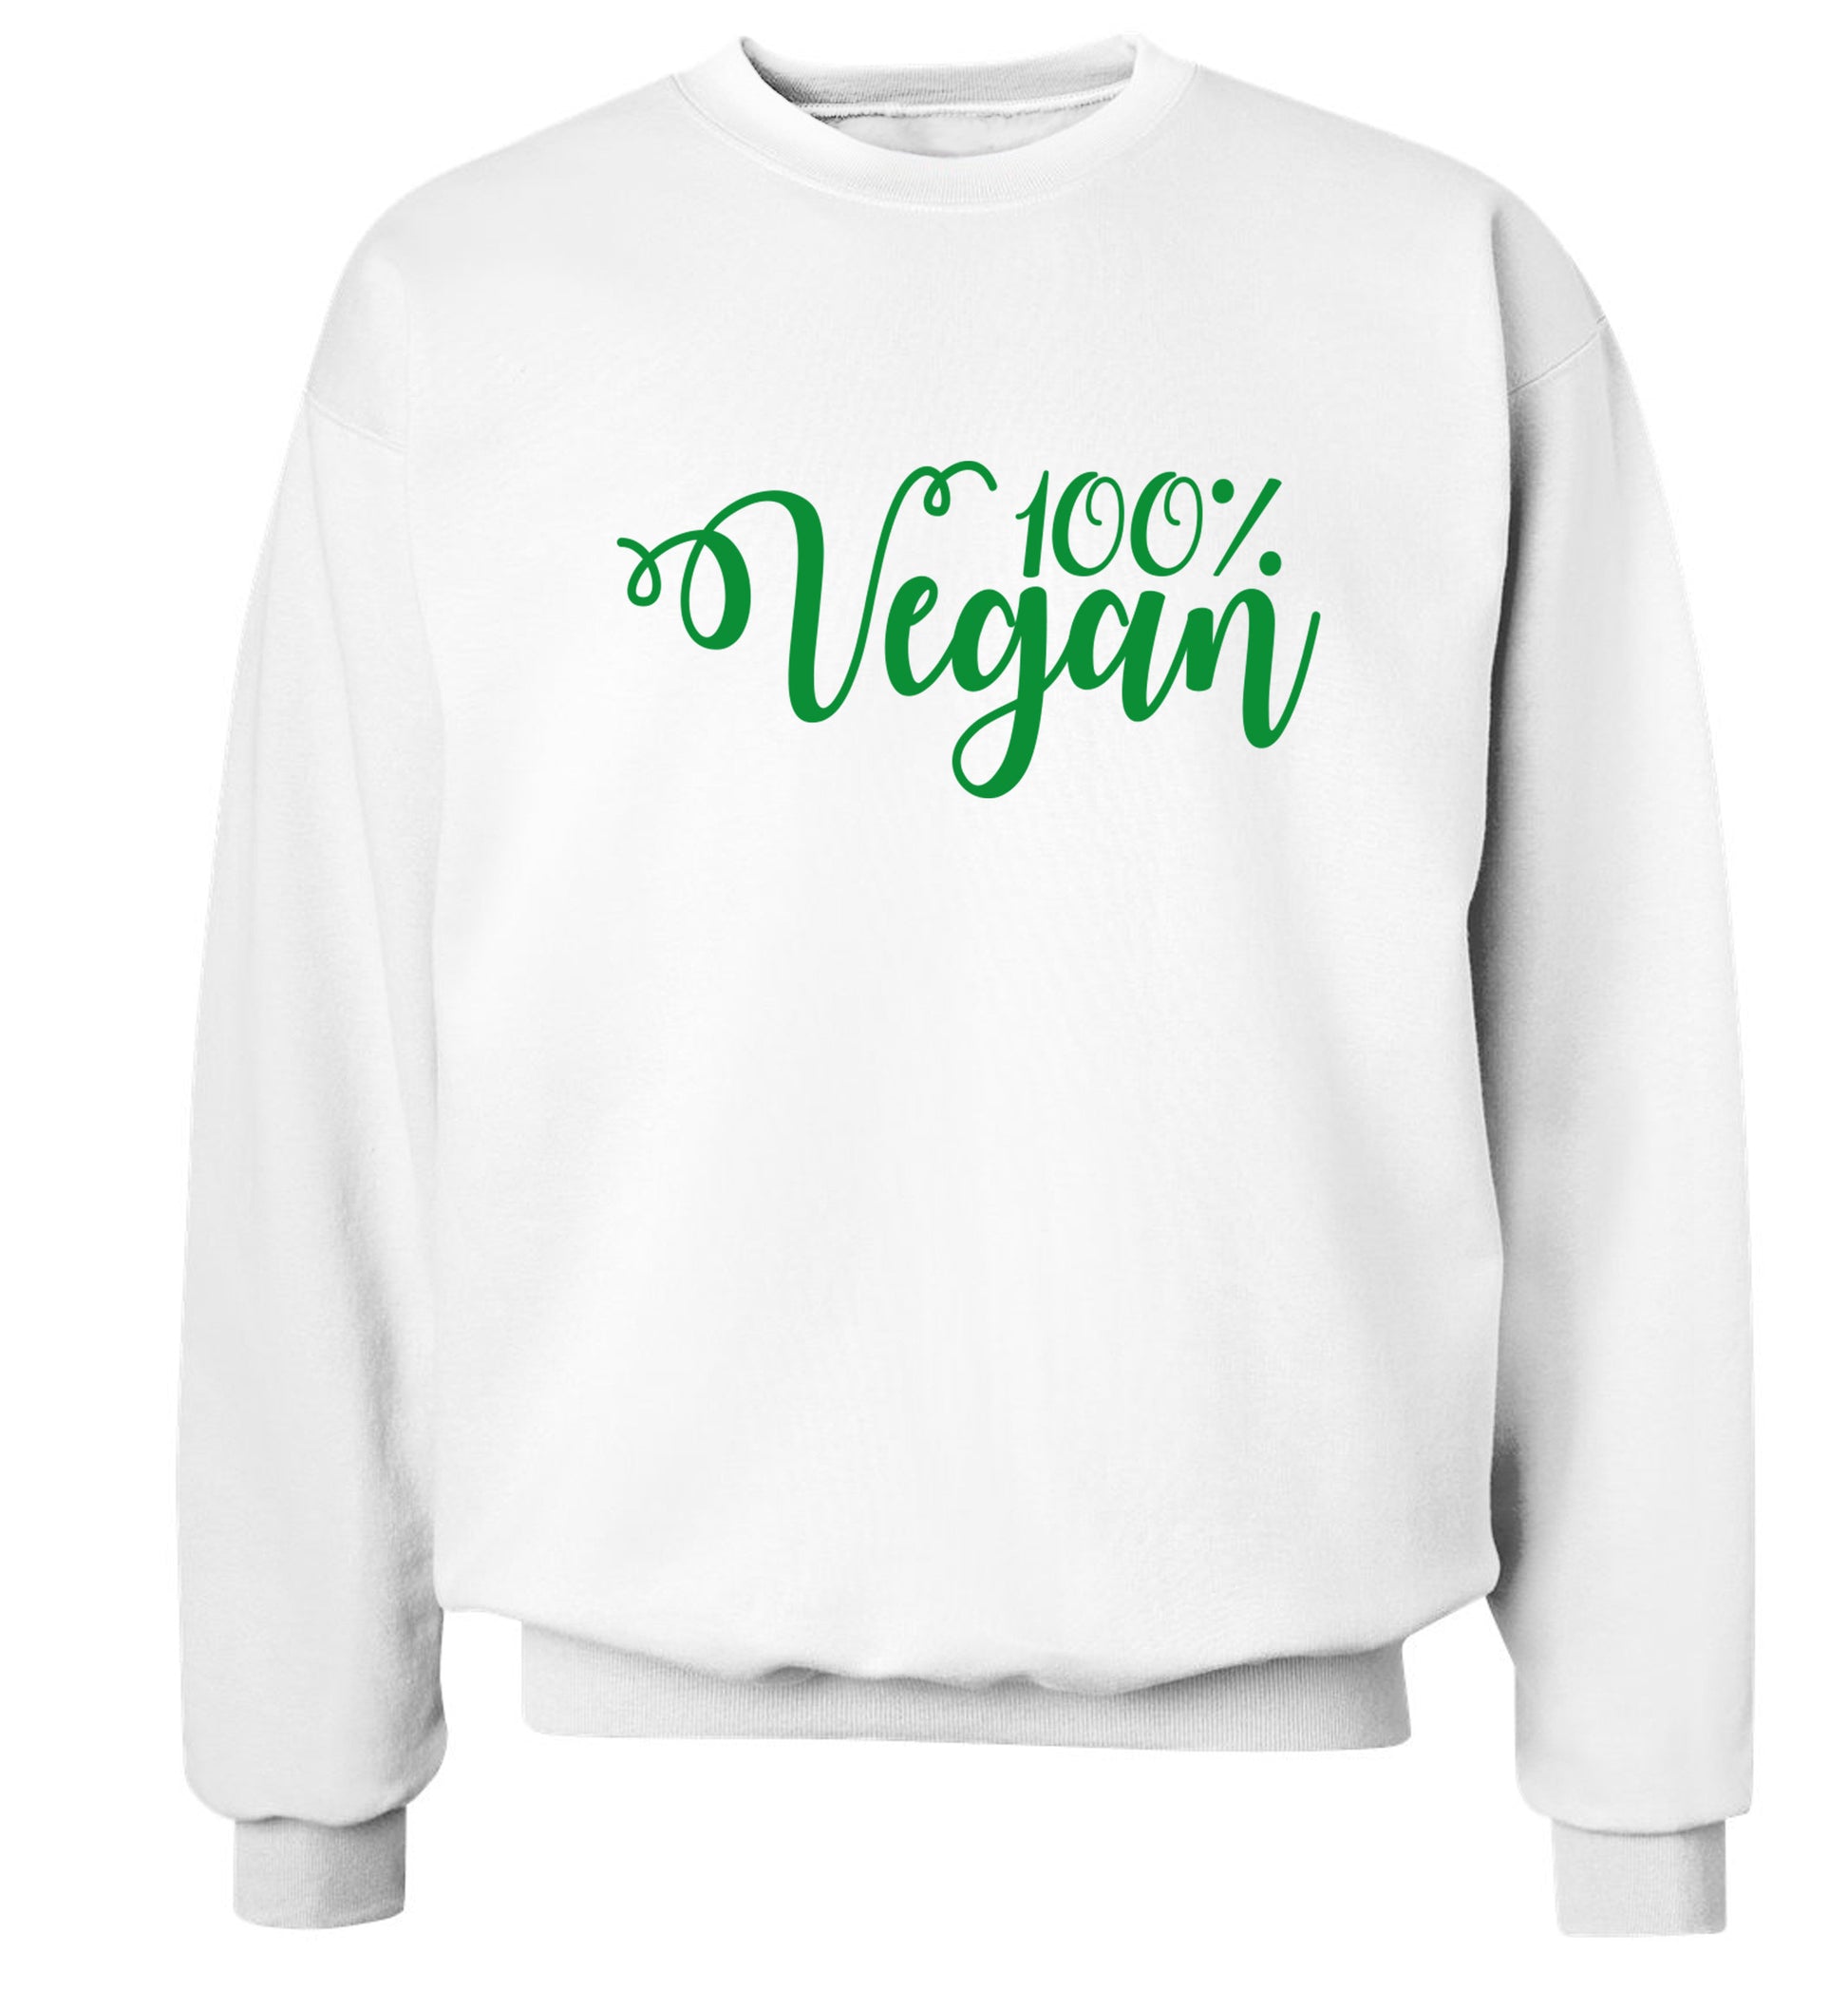 100% Vegan Adult's unisex white Sweater 2XL